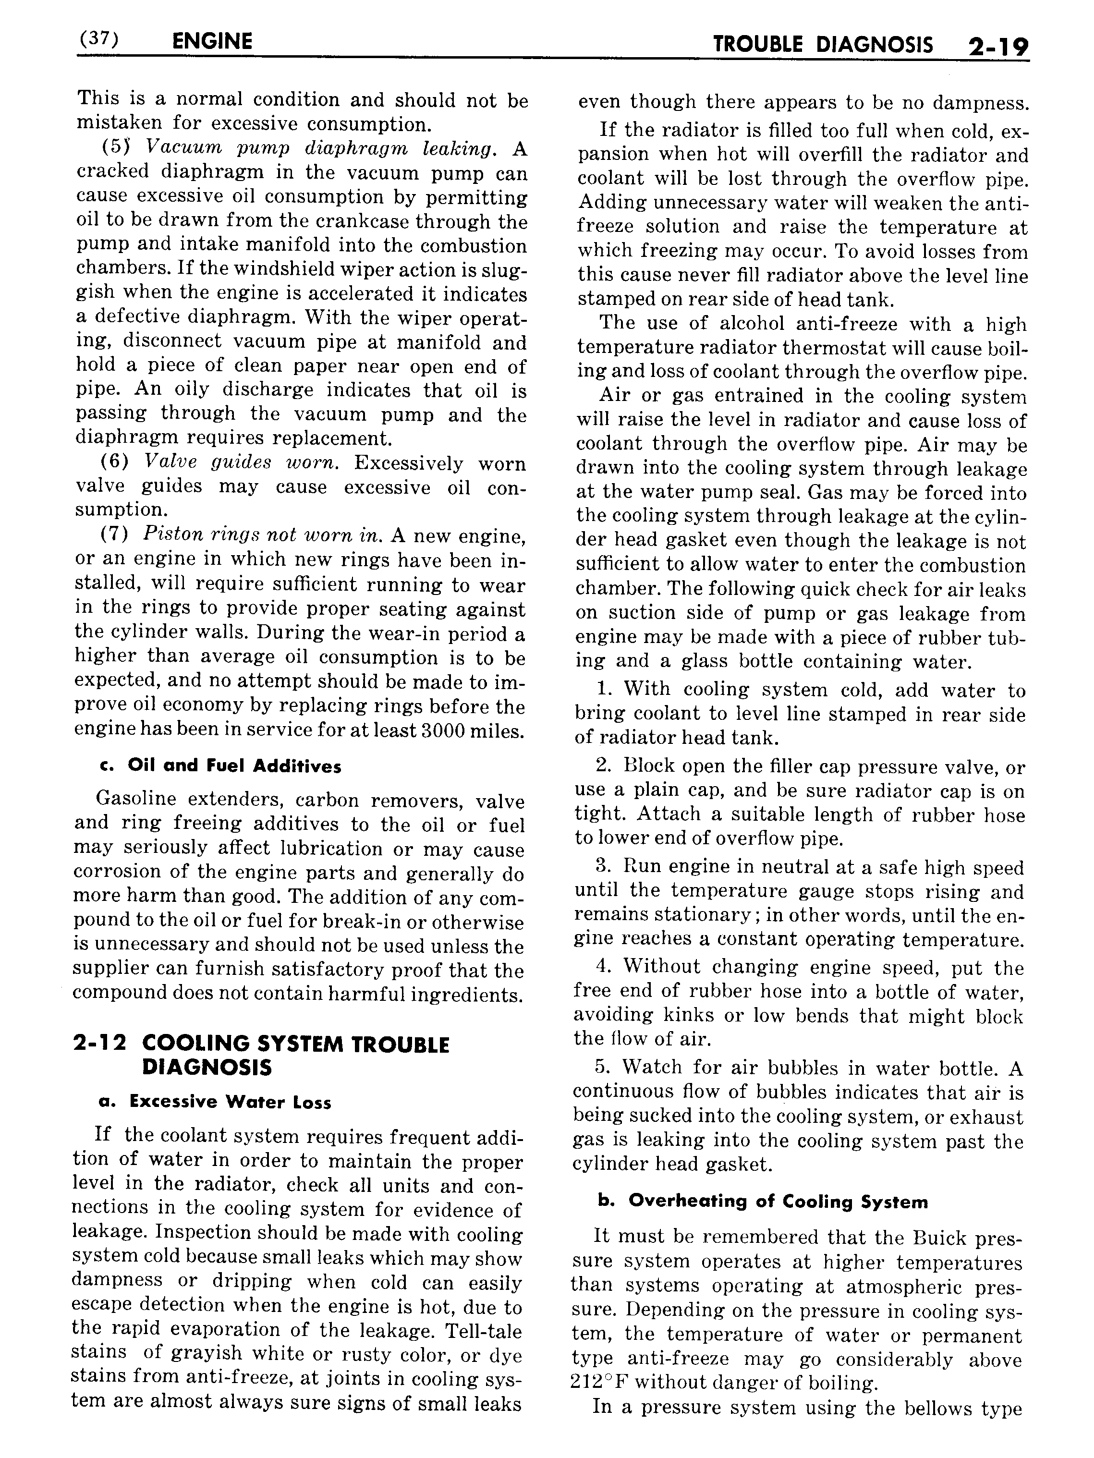 n_03 1951 Buick Shop Manual - Engine-019-019.jpg